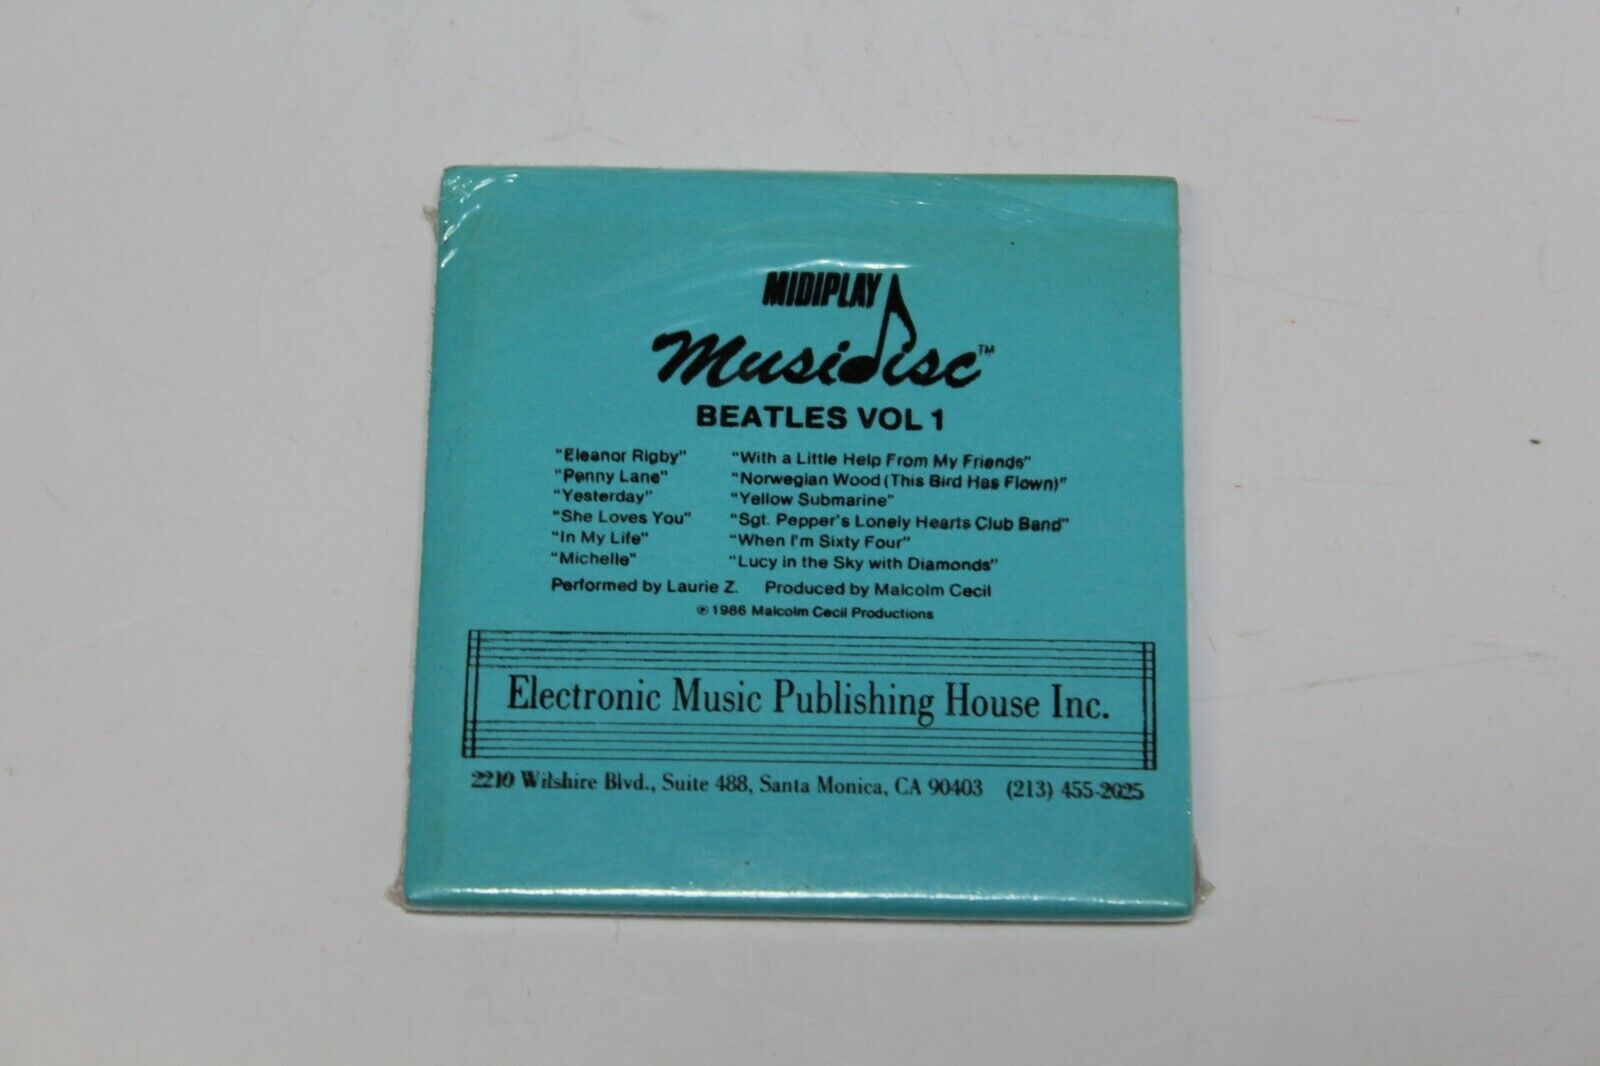 VTG MidiPlay MusicDisc Beatles Vol 1 - 1986 - NEW - Factory Sealed